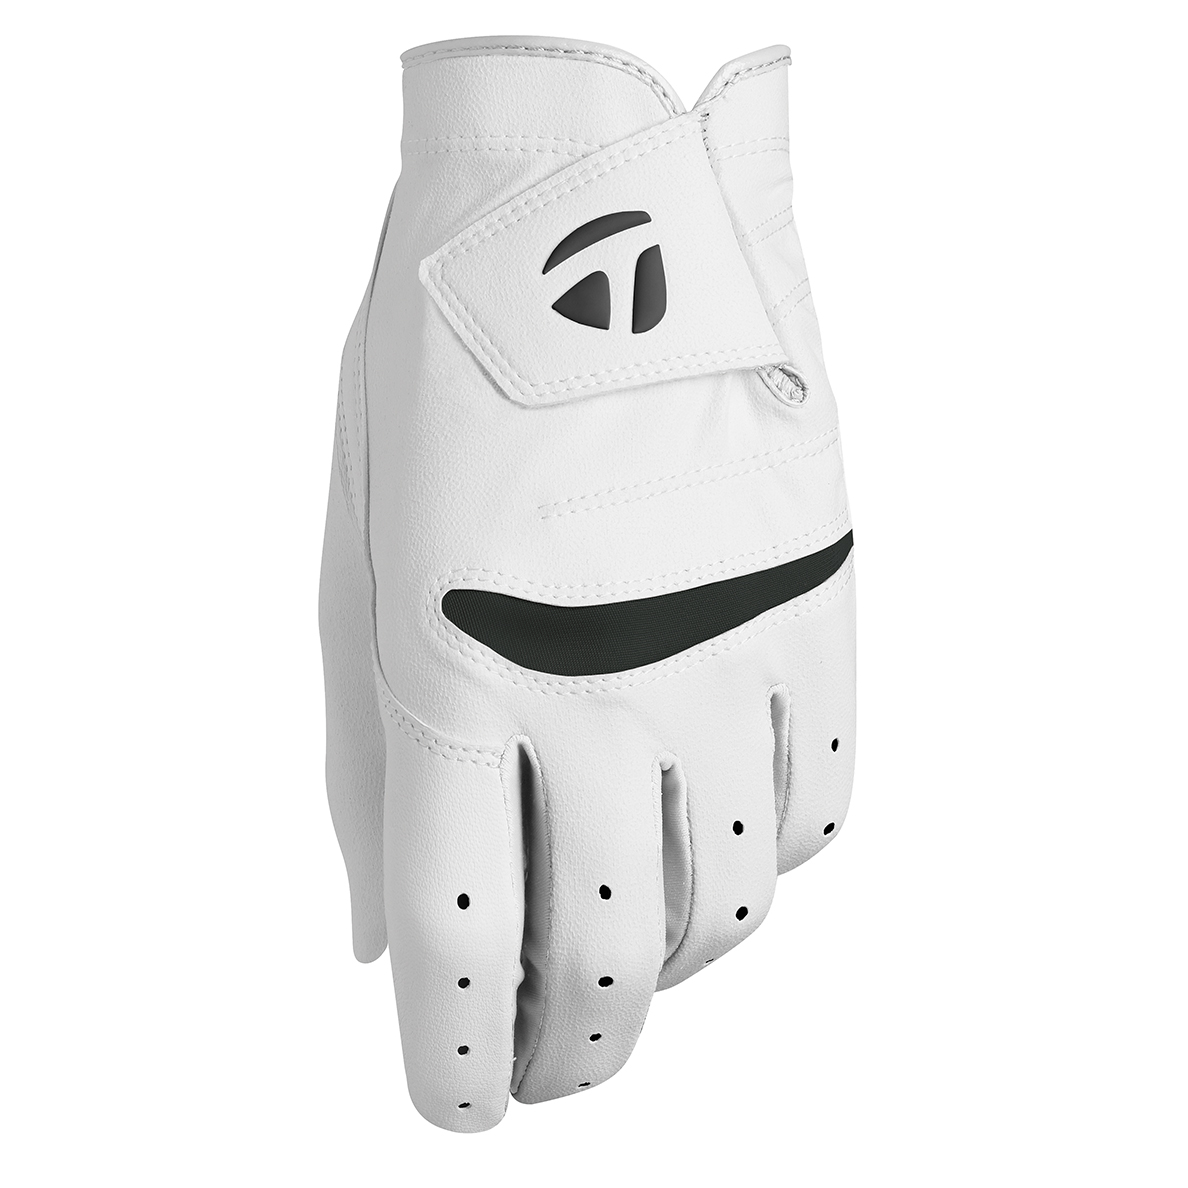 Shop Golf Gloves | TaylorMade Golf